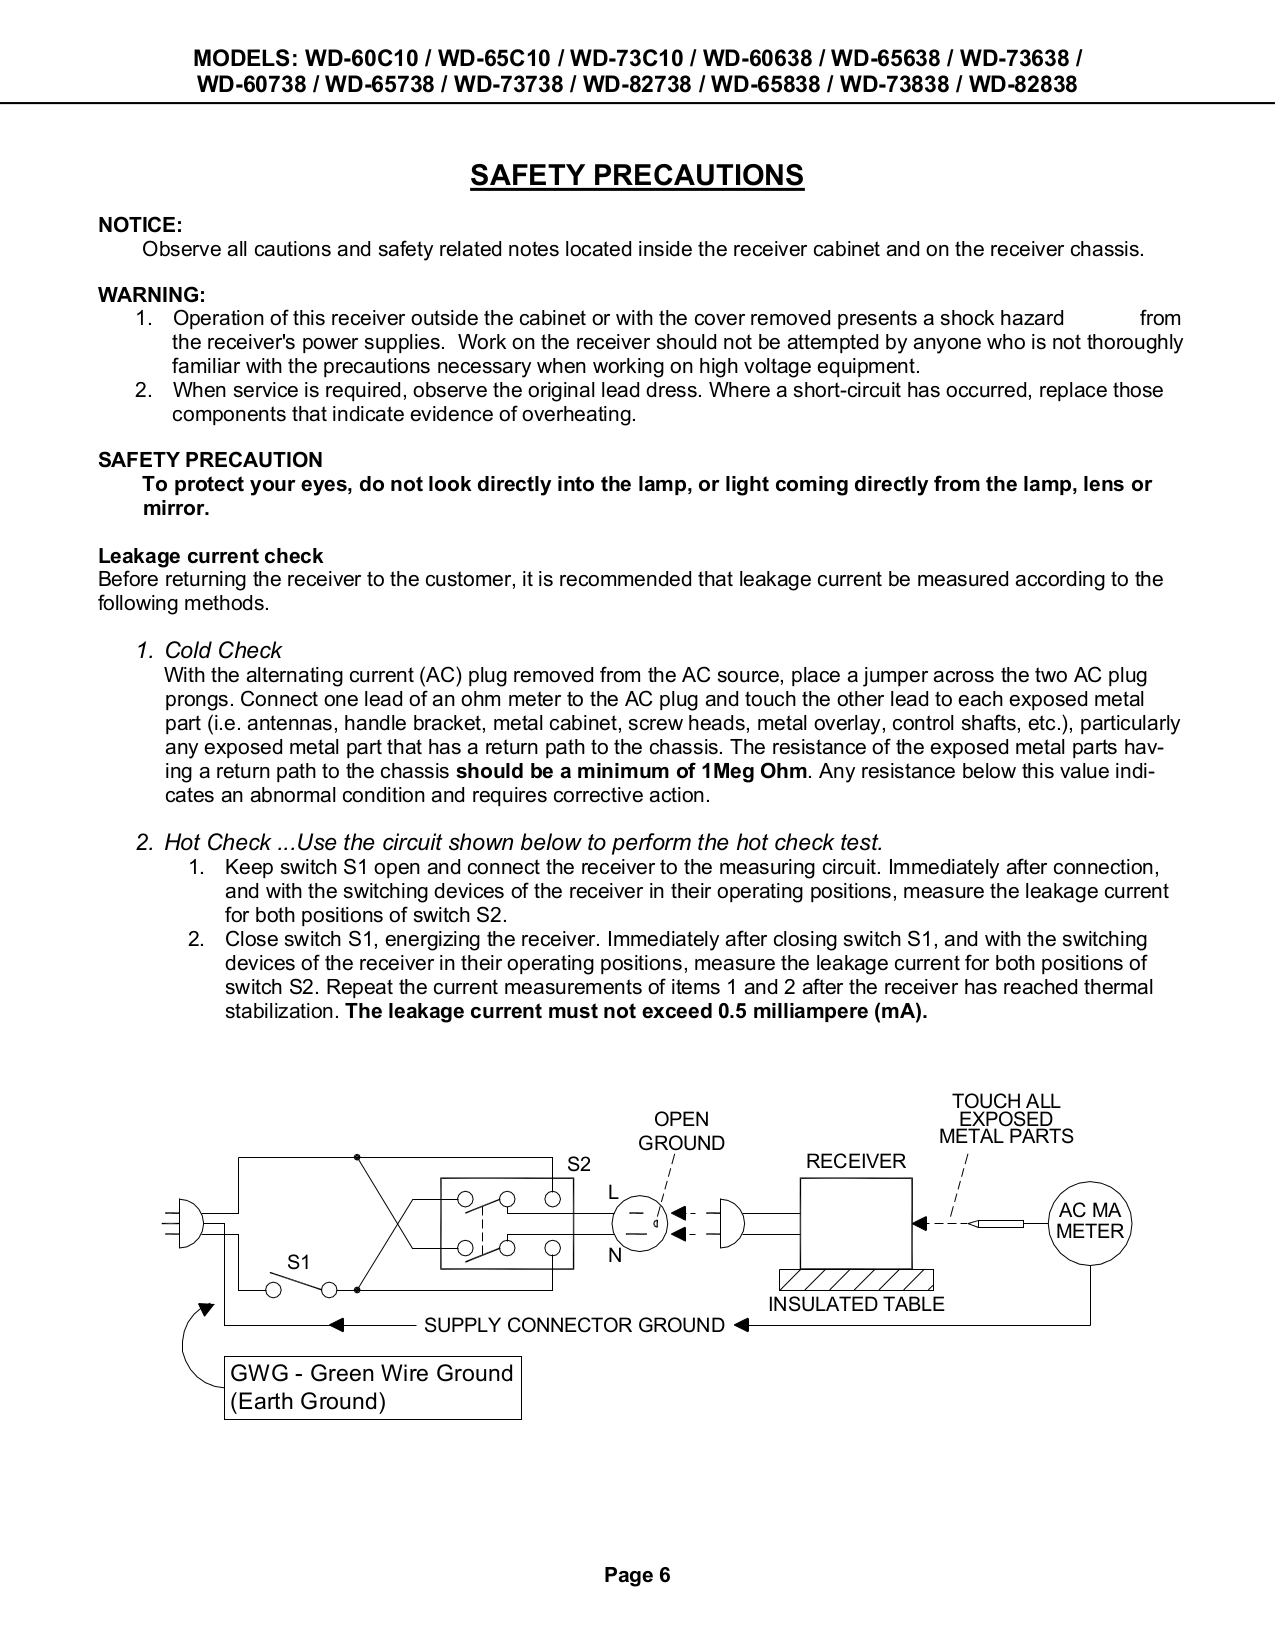 PDF manual for Mitsubishi TV WD-82838